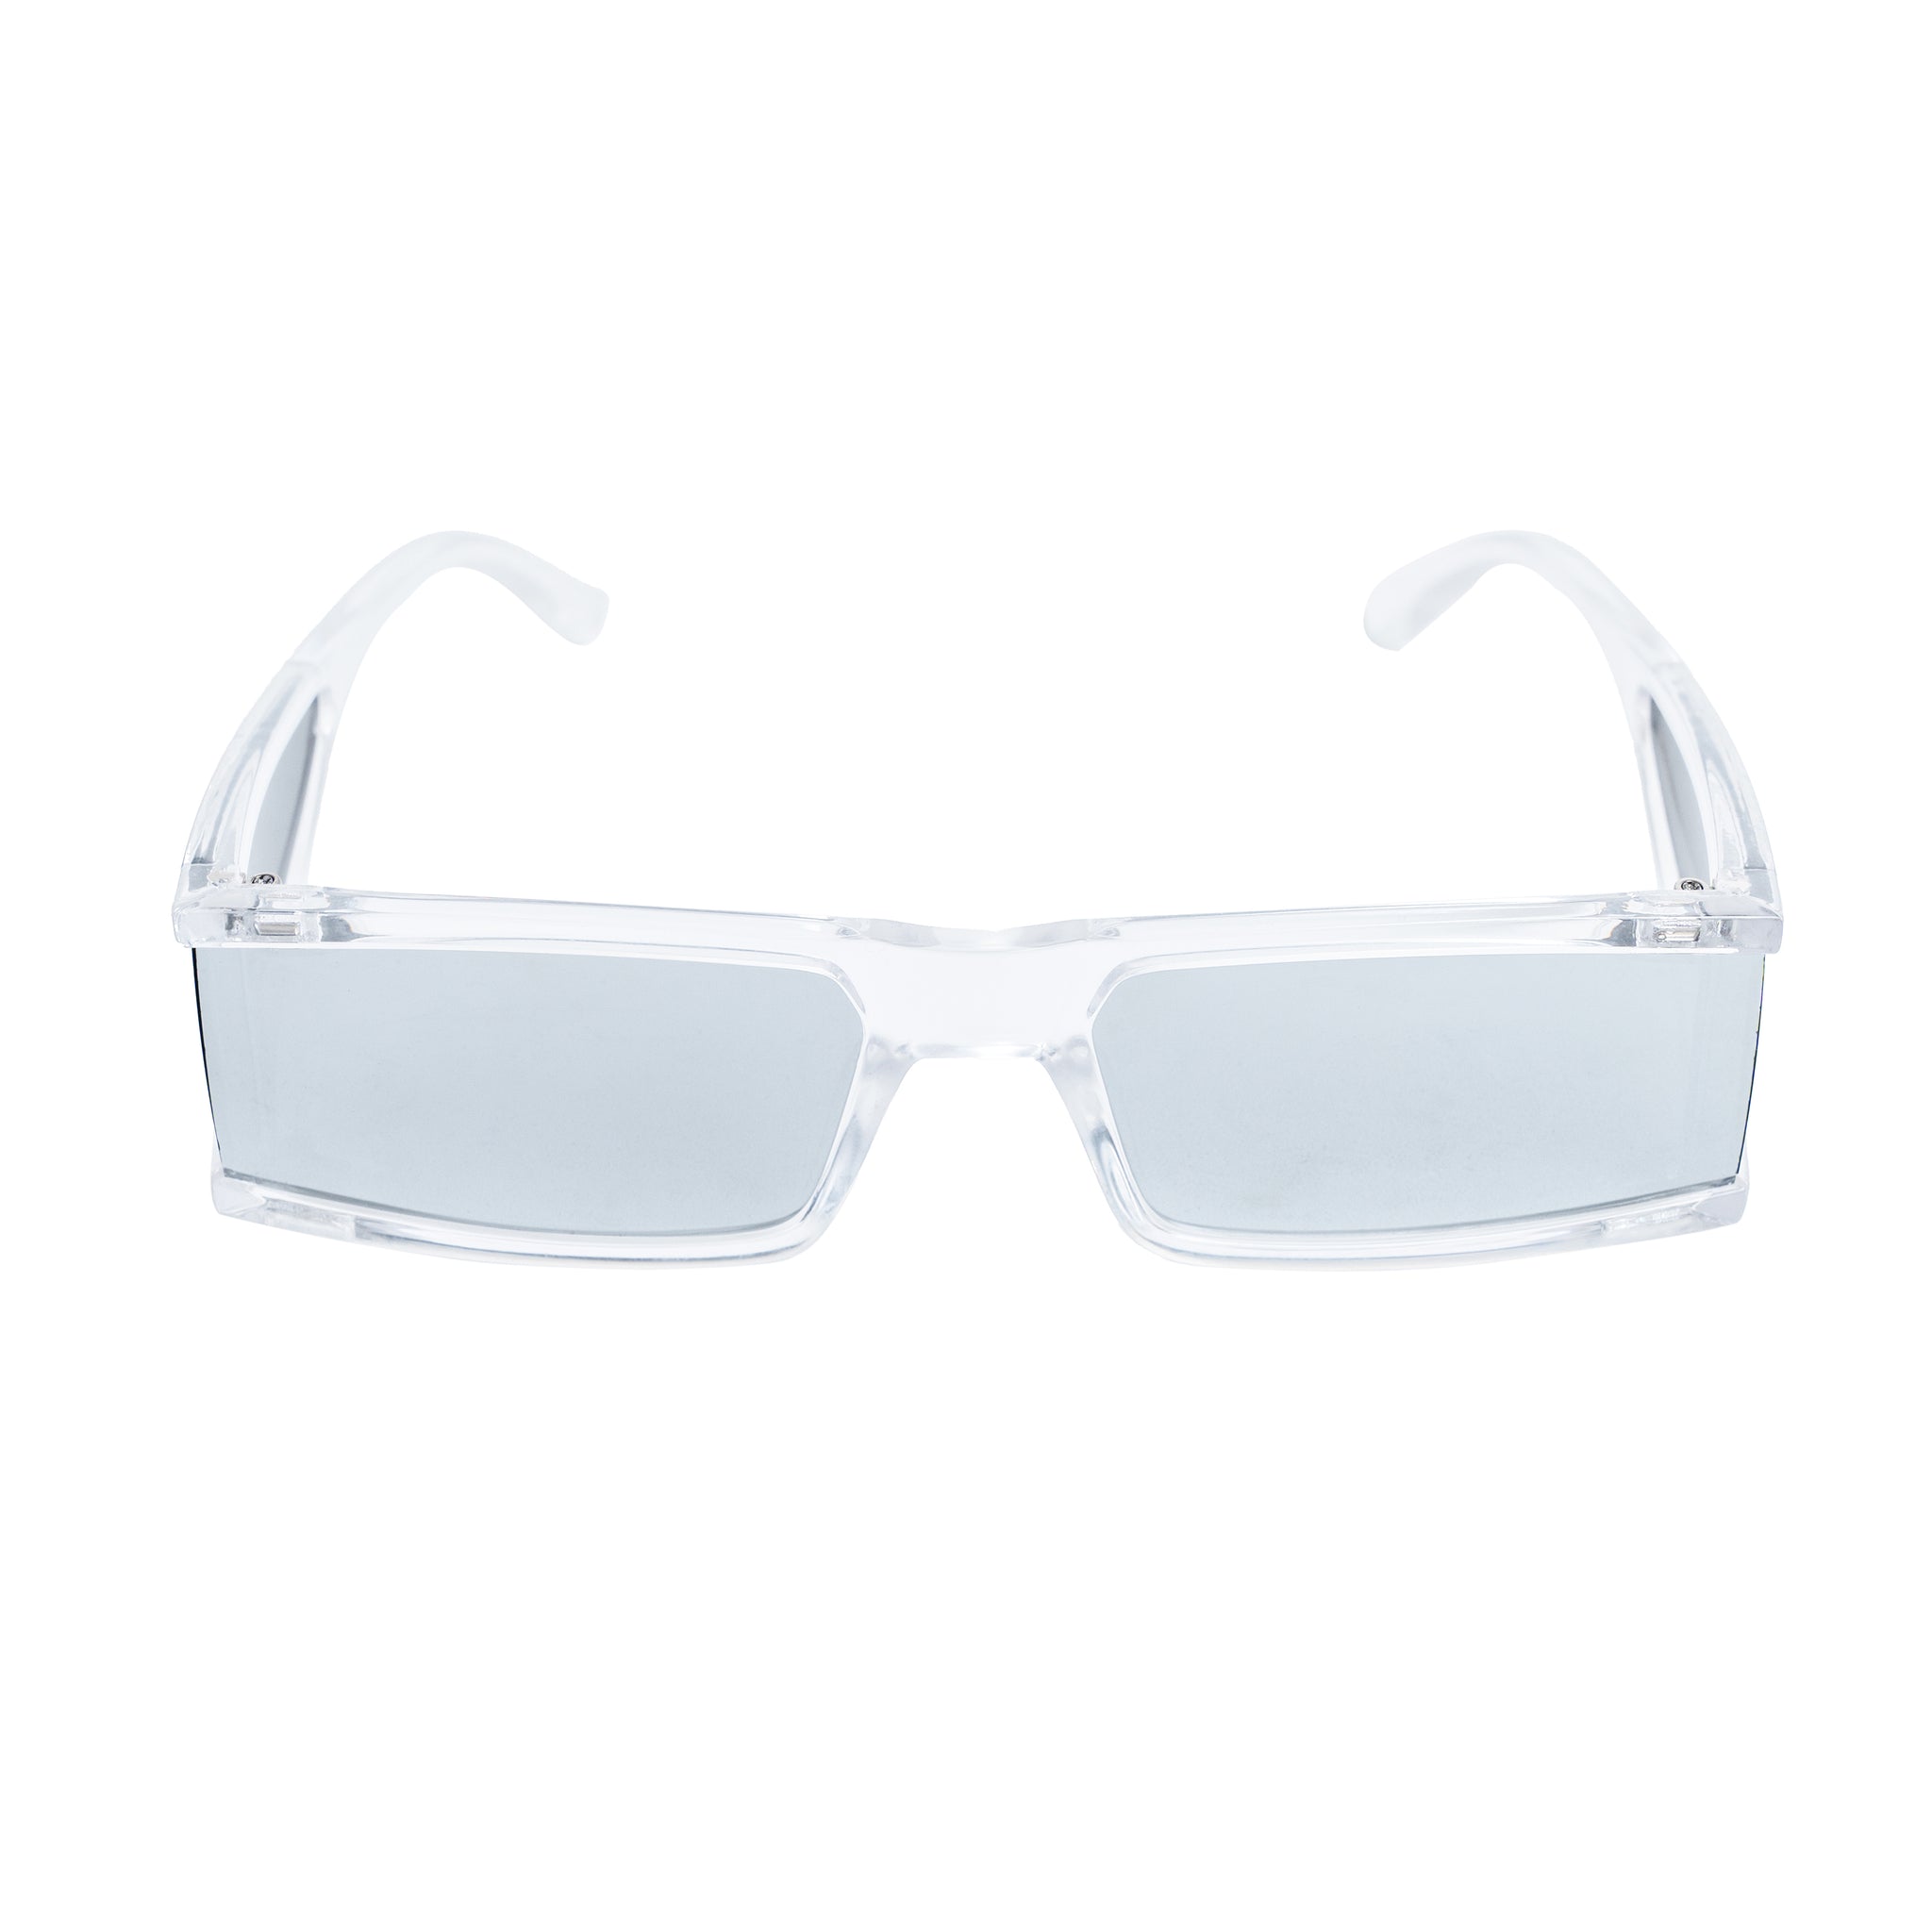 Chokore Special 3-in-1 Gift Set (Pocket Square, Cufflinks, & Sunglasses)